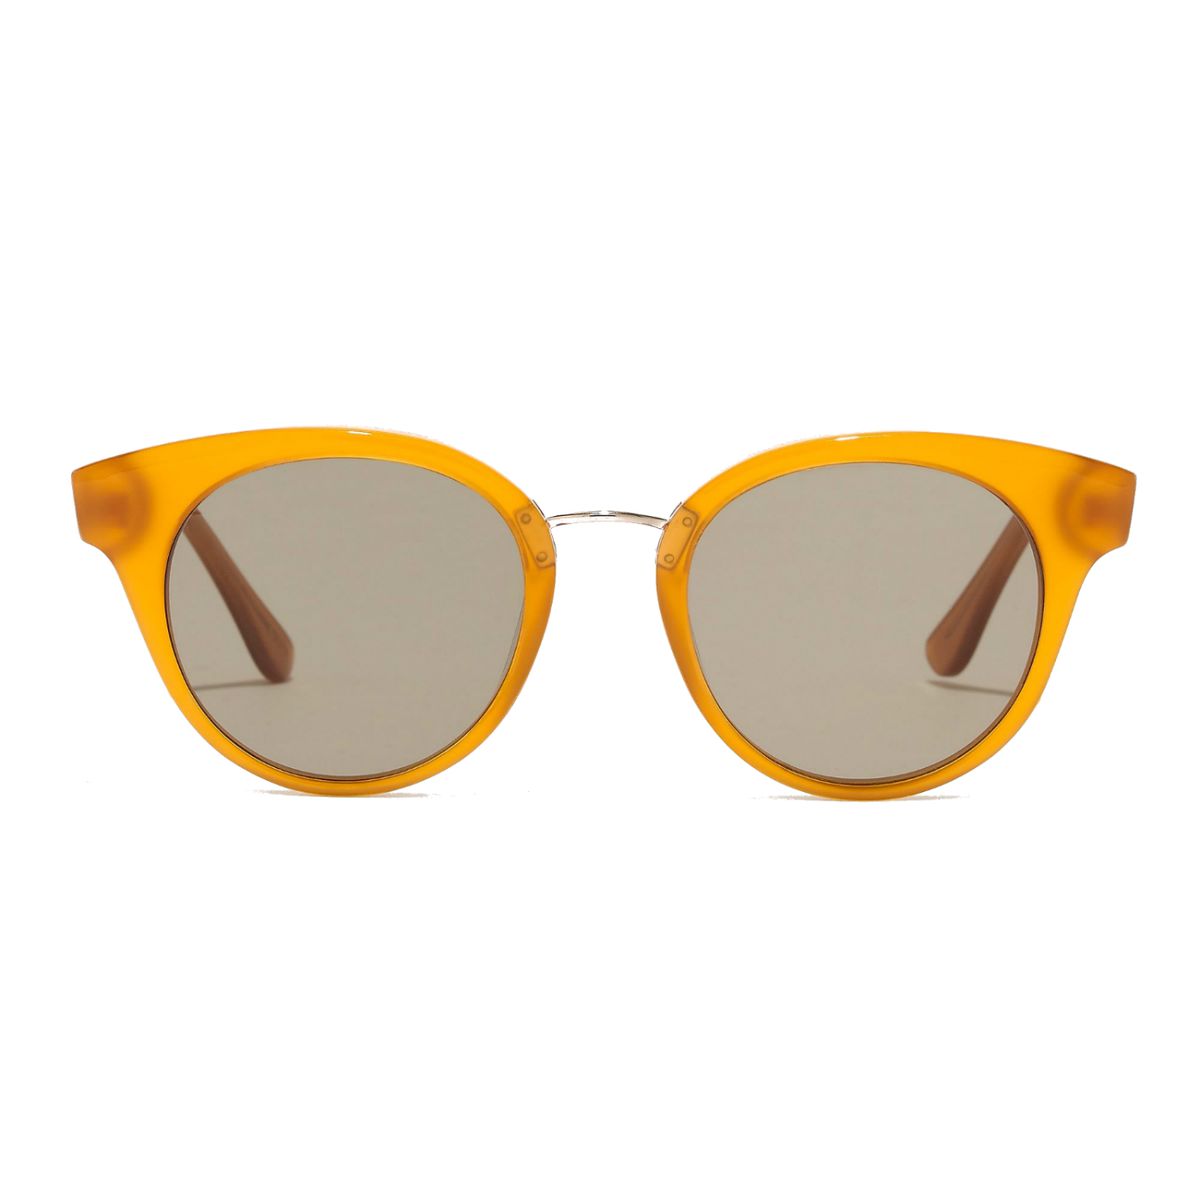 Seaside Round Cateye Sunglasses